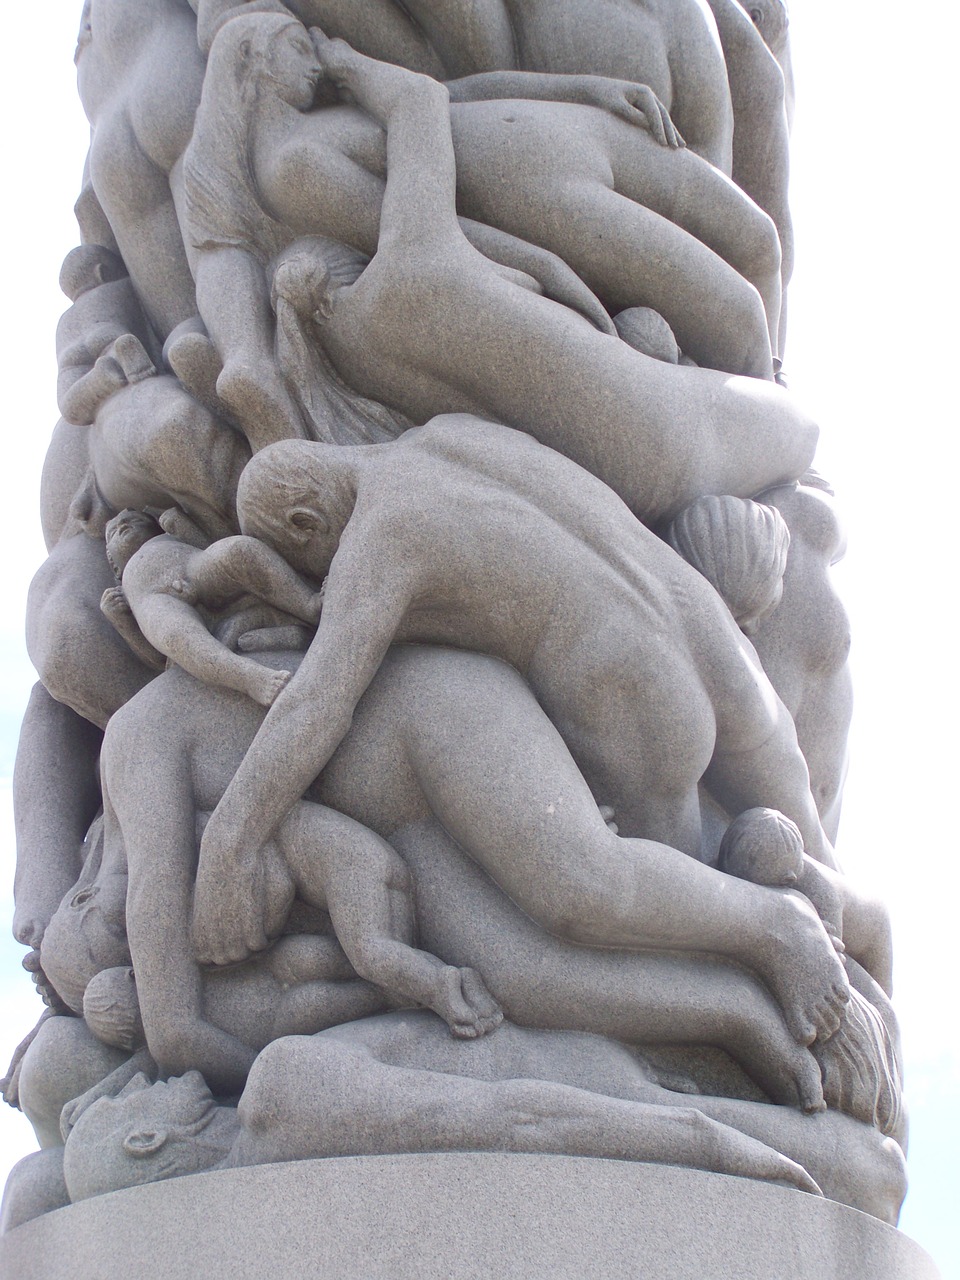 oslo norway sculpture free photo